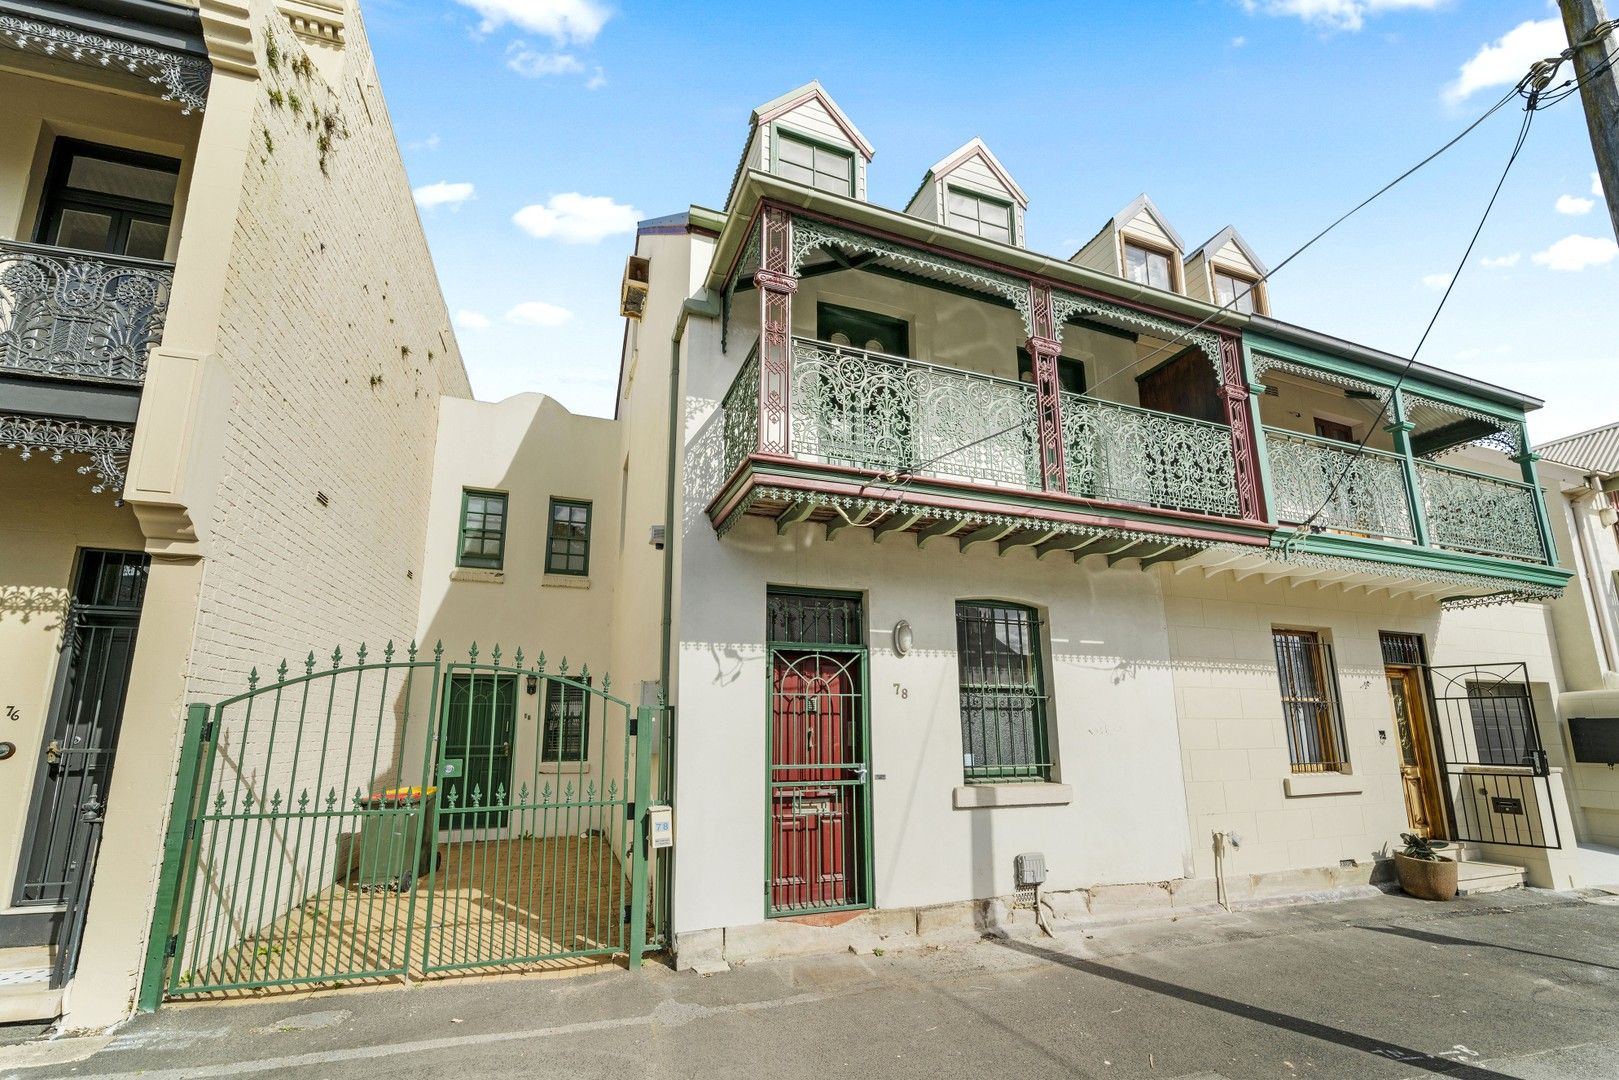 4 bedrooms Terrace in 78 Catherine Street GLEBE NSW, 2037